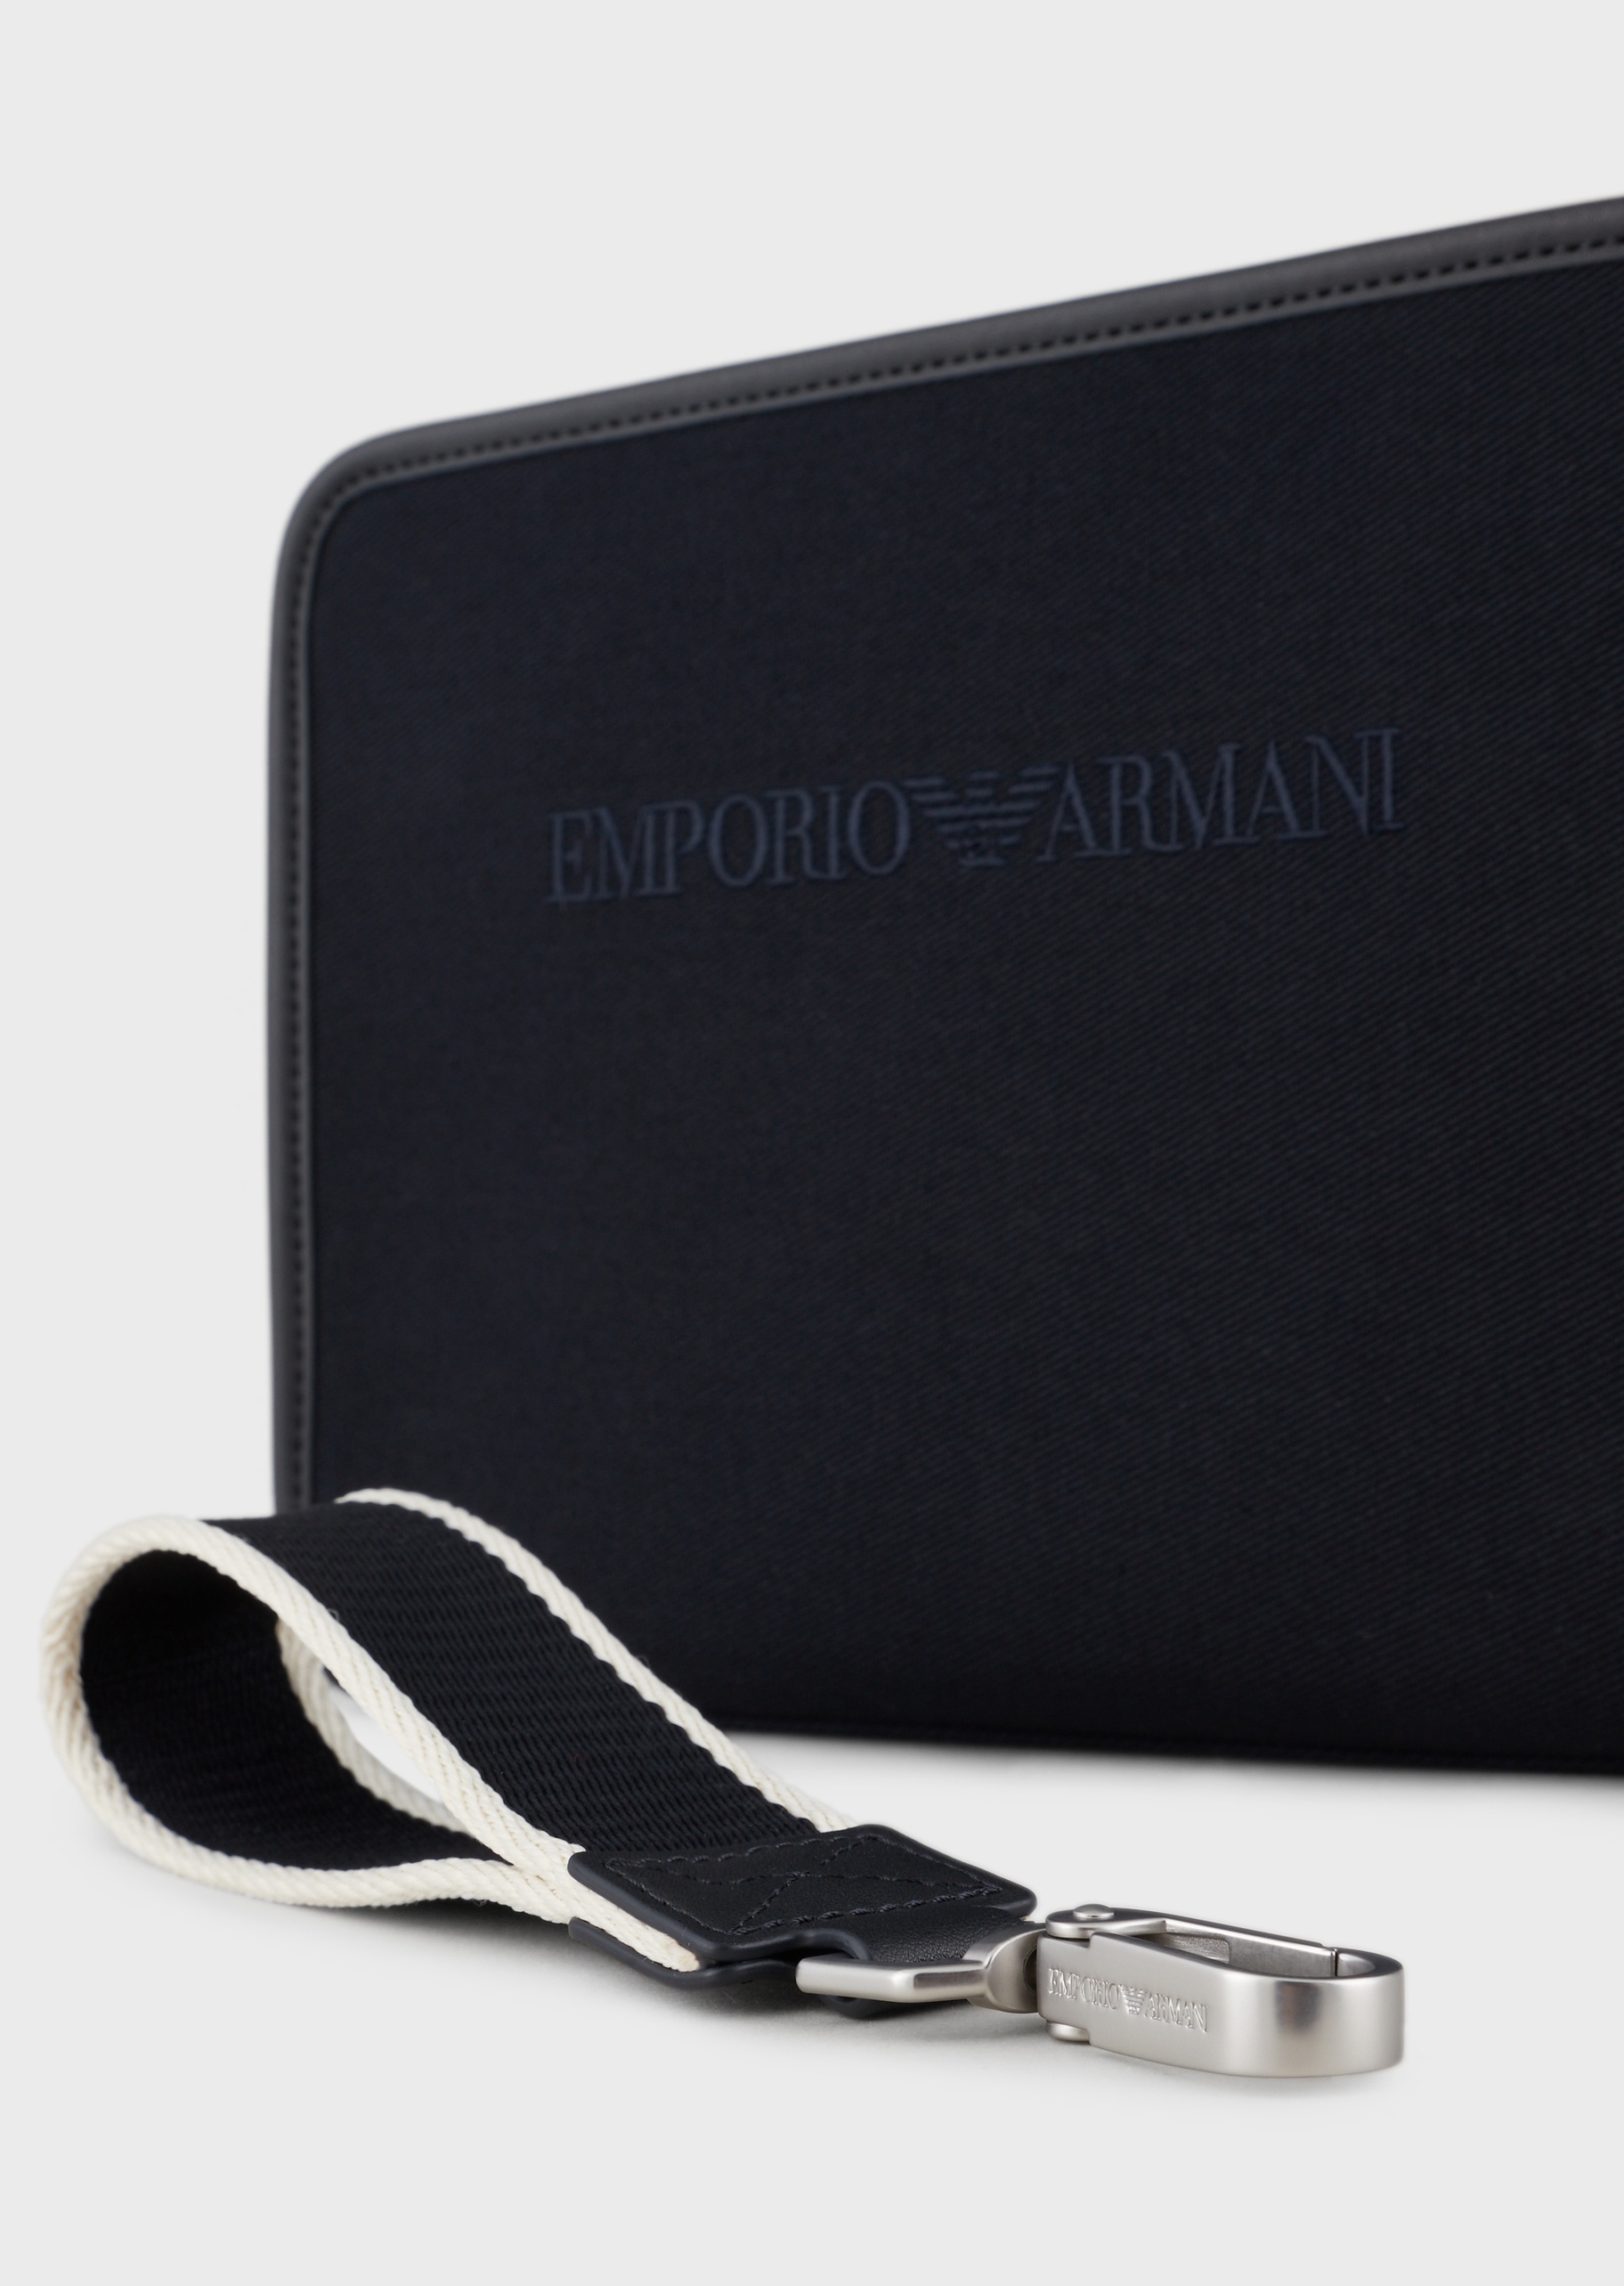 Emporio Armani 刺绣标识帆布手拿包